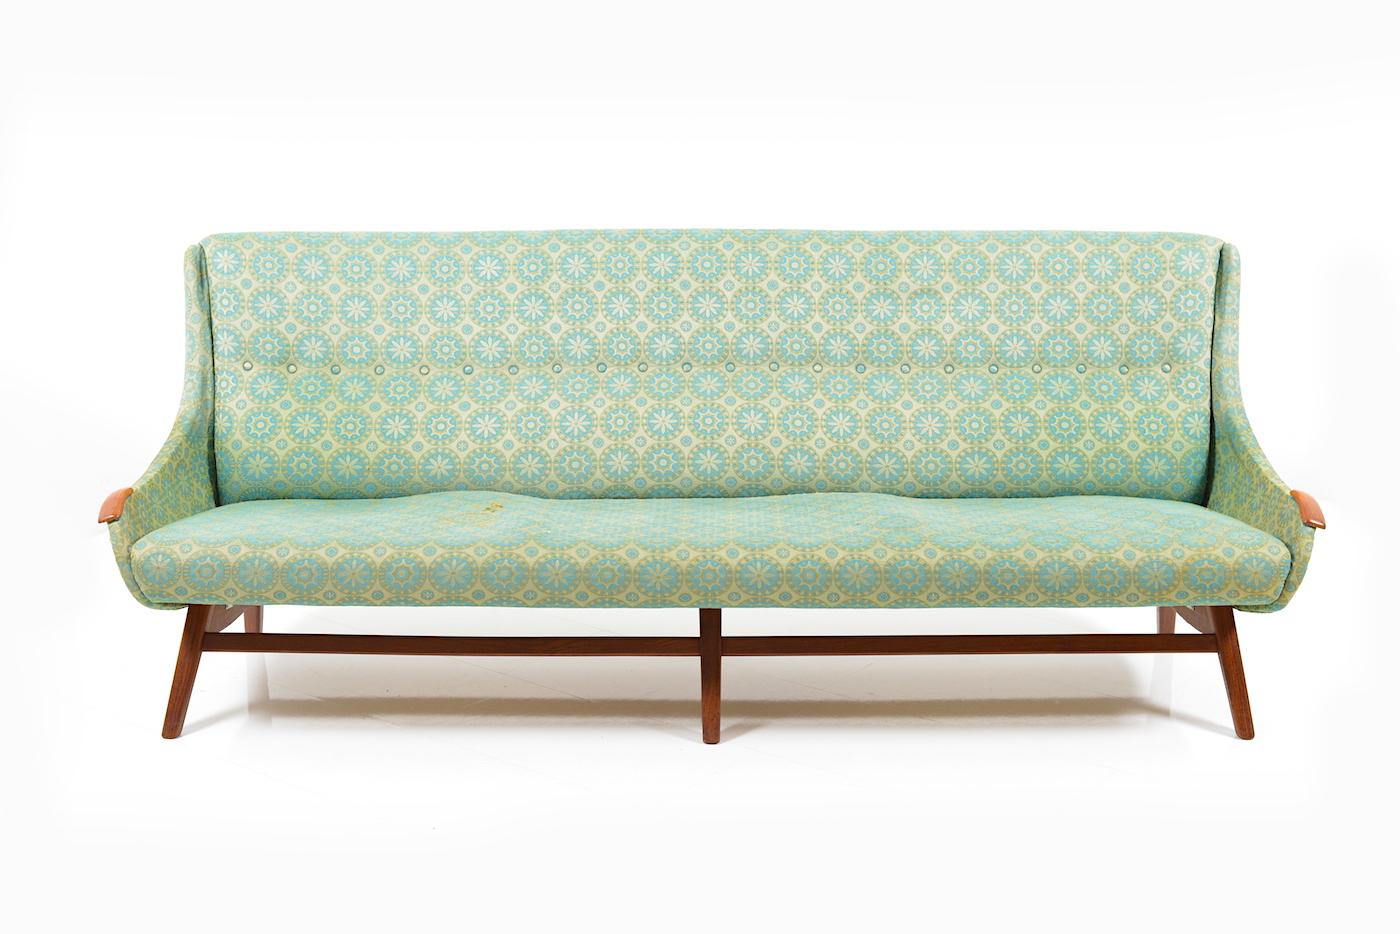 Scandinavian Modern 1950s Prototype Sofa by the Danish Designer & Furniture Maker Svend Skipper For Sale